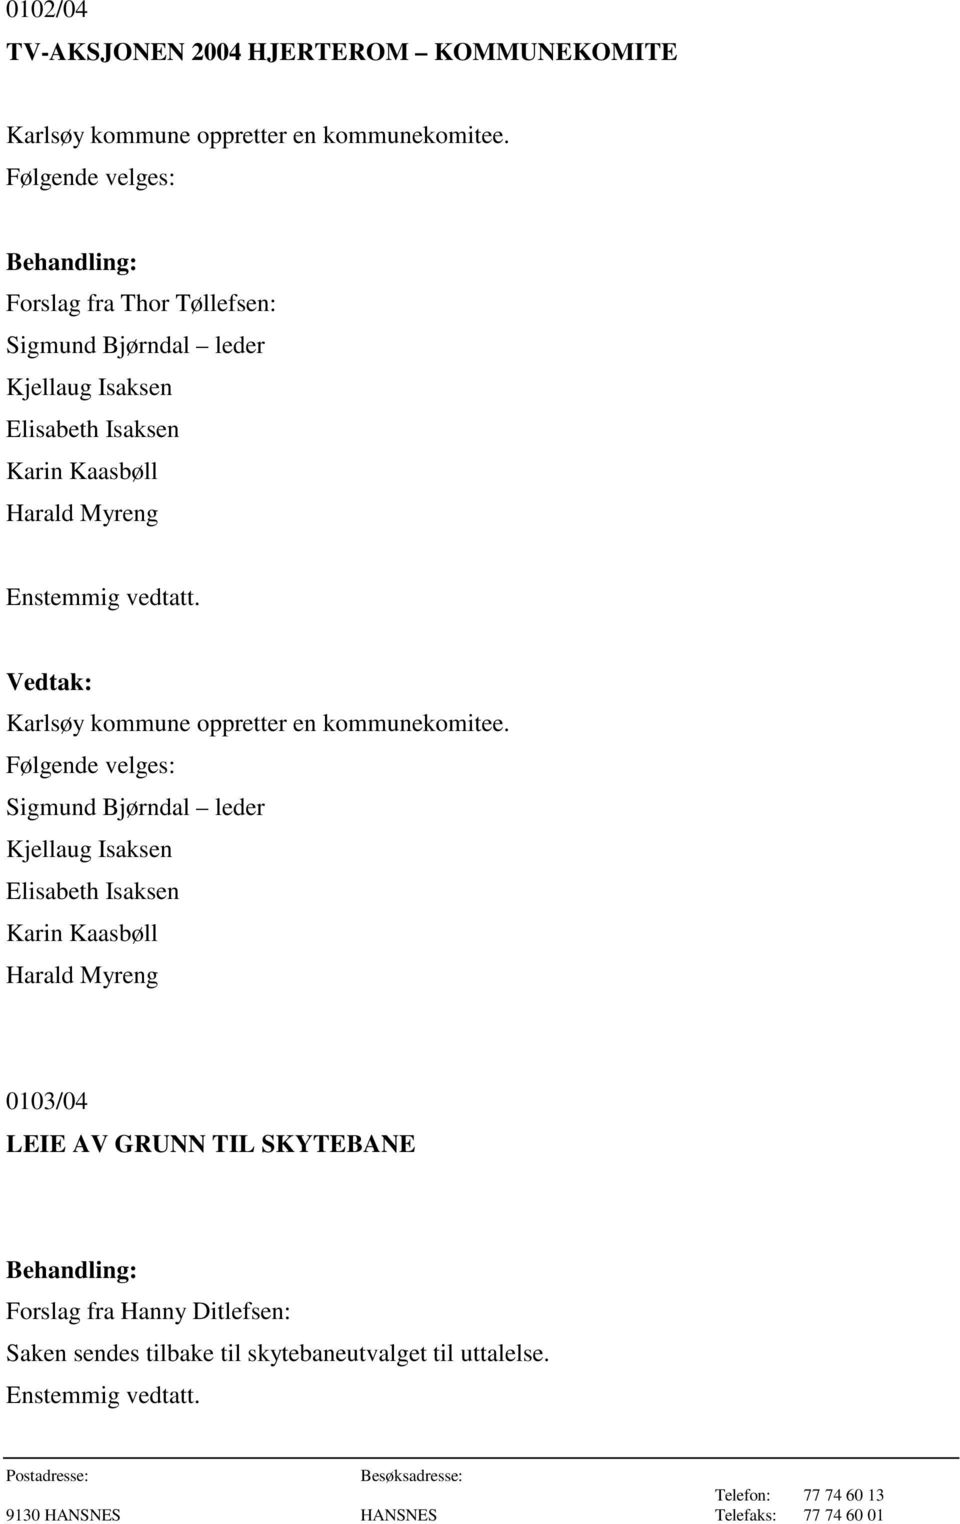 Enstemmig vedtatt. Karlsøy kommune oppretter en kommunekomitee.